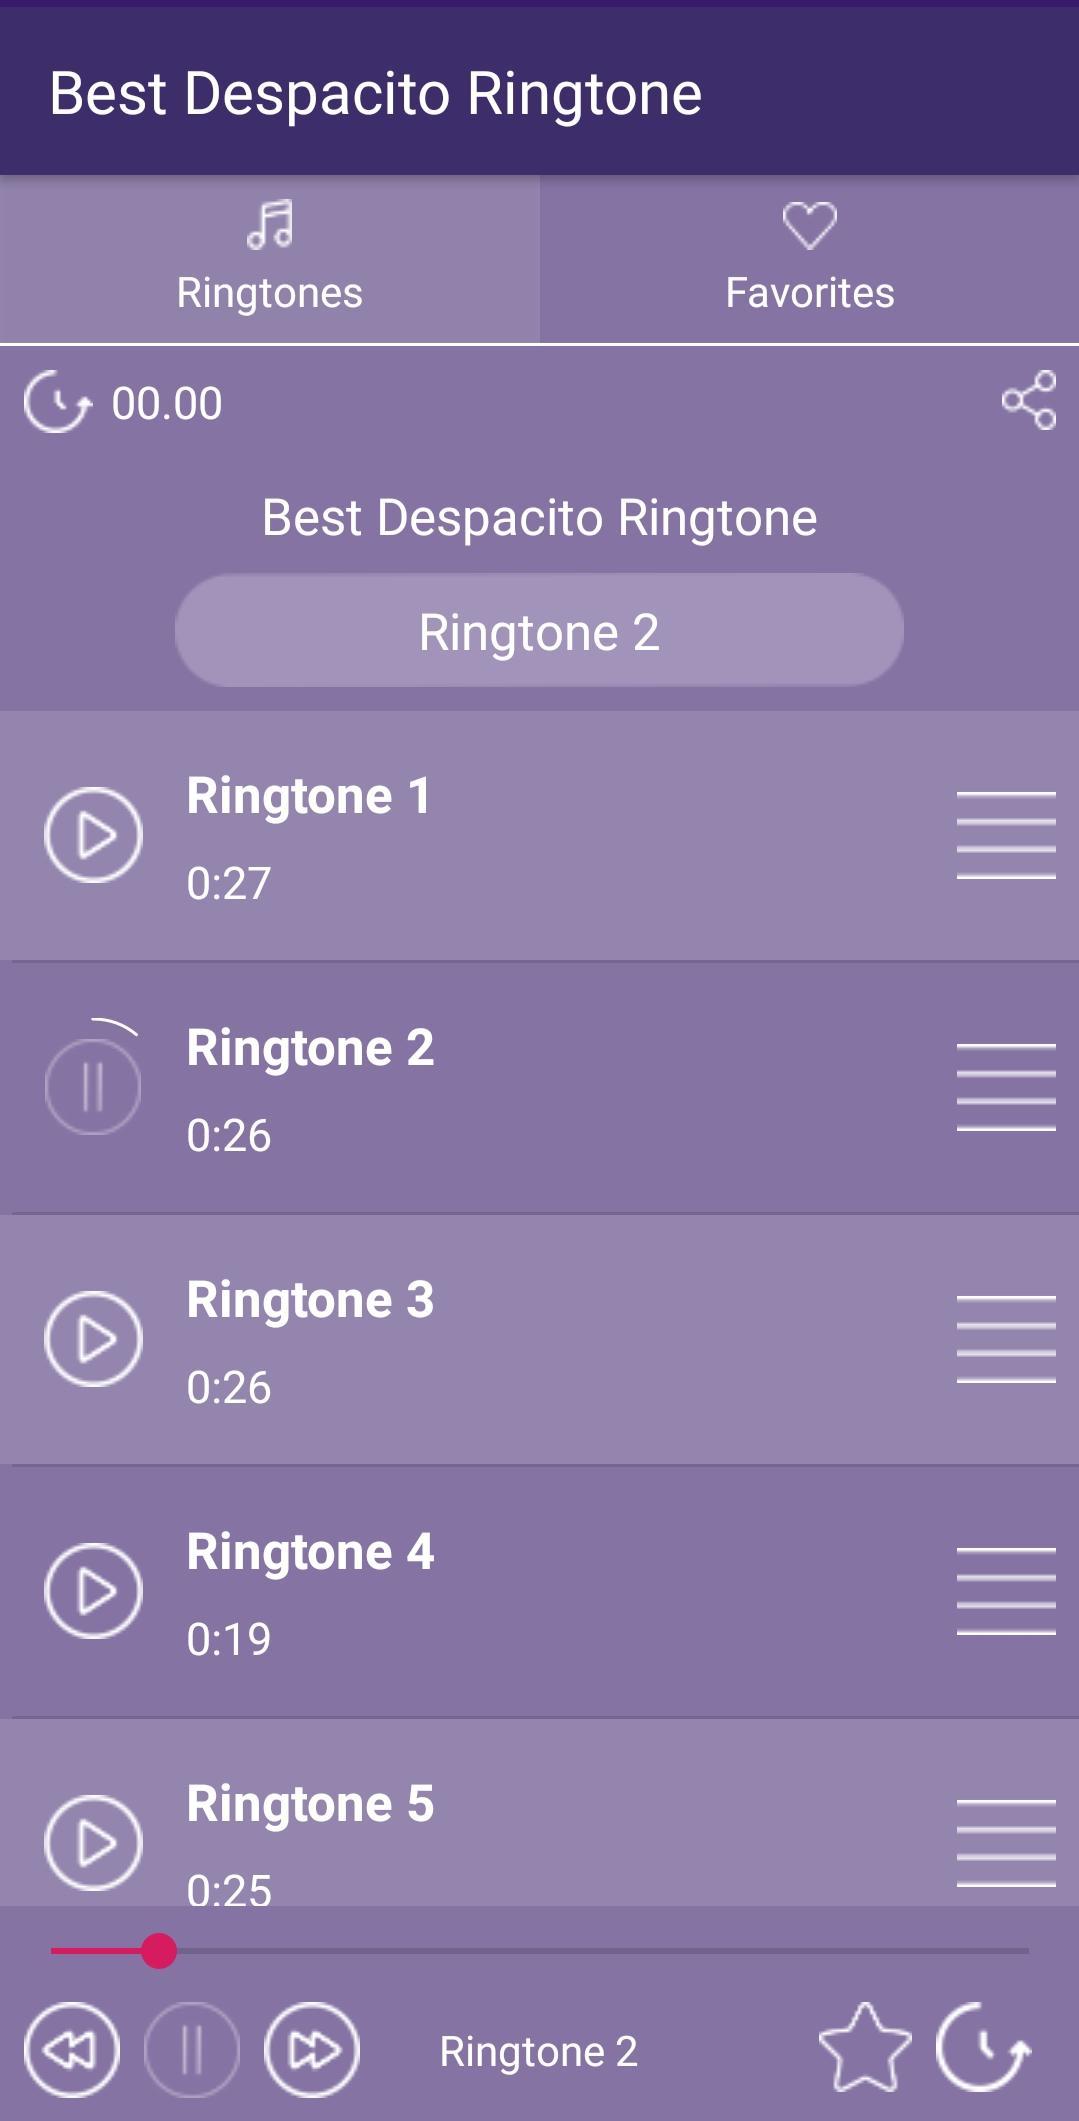 Despacito Ringtone for Android - APK Download